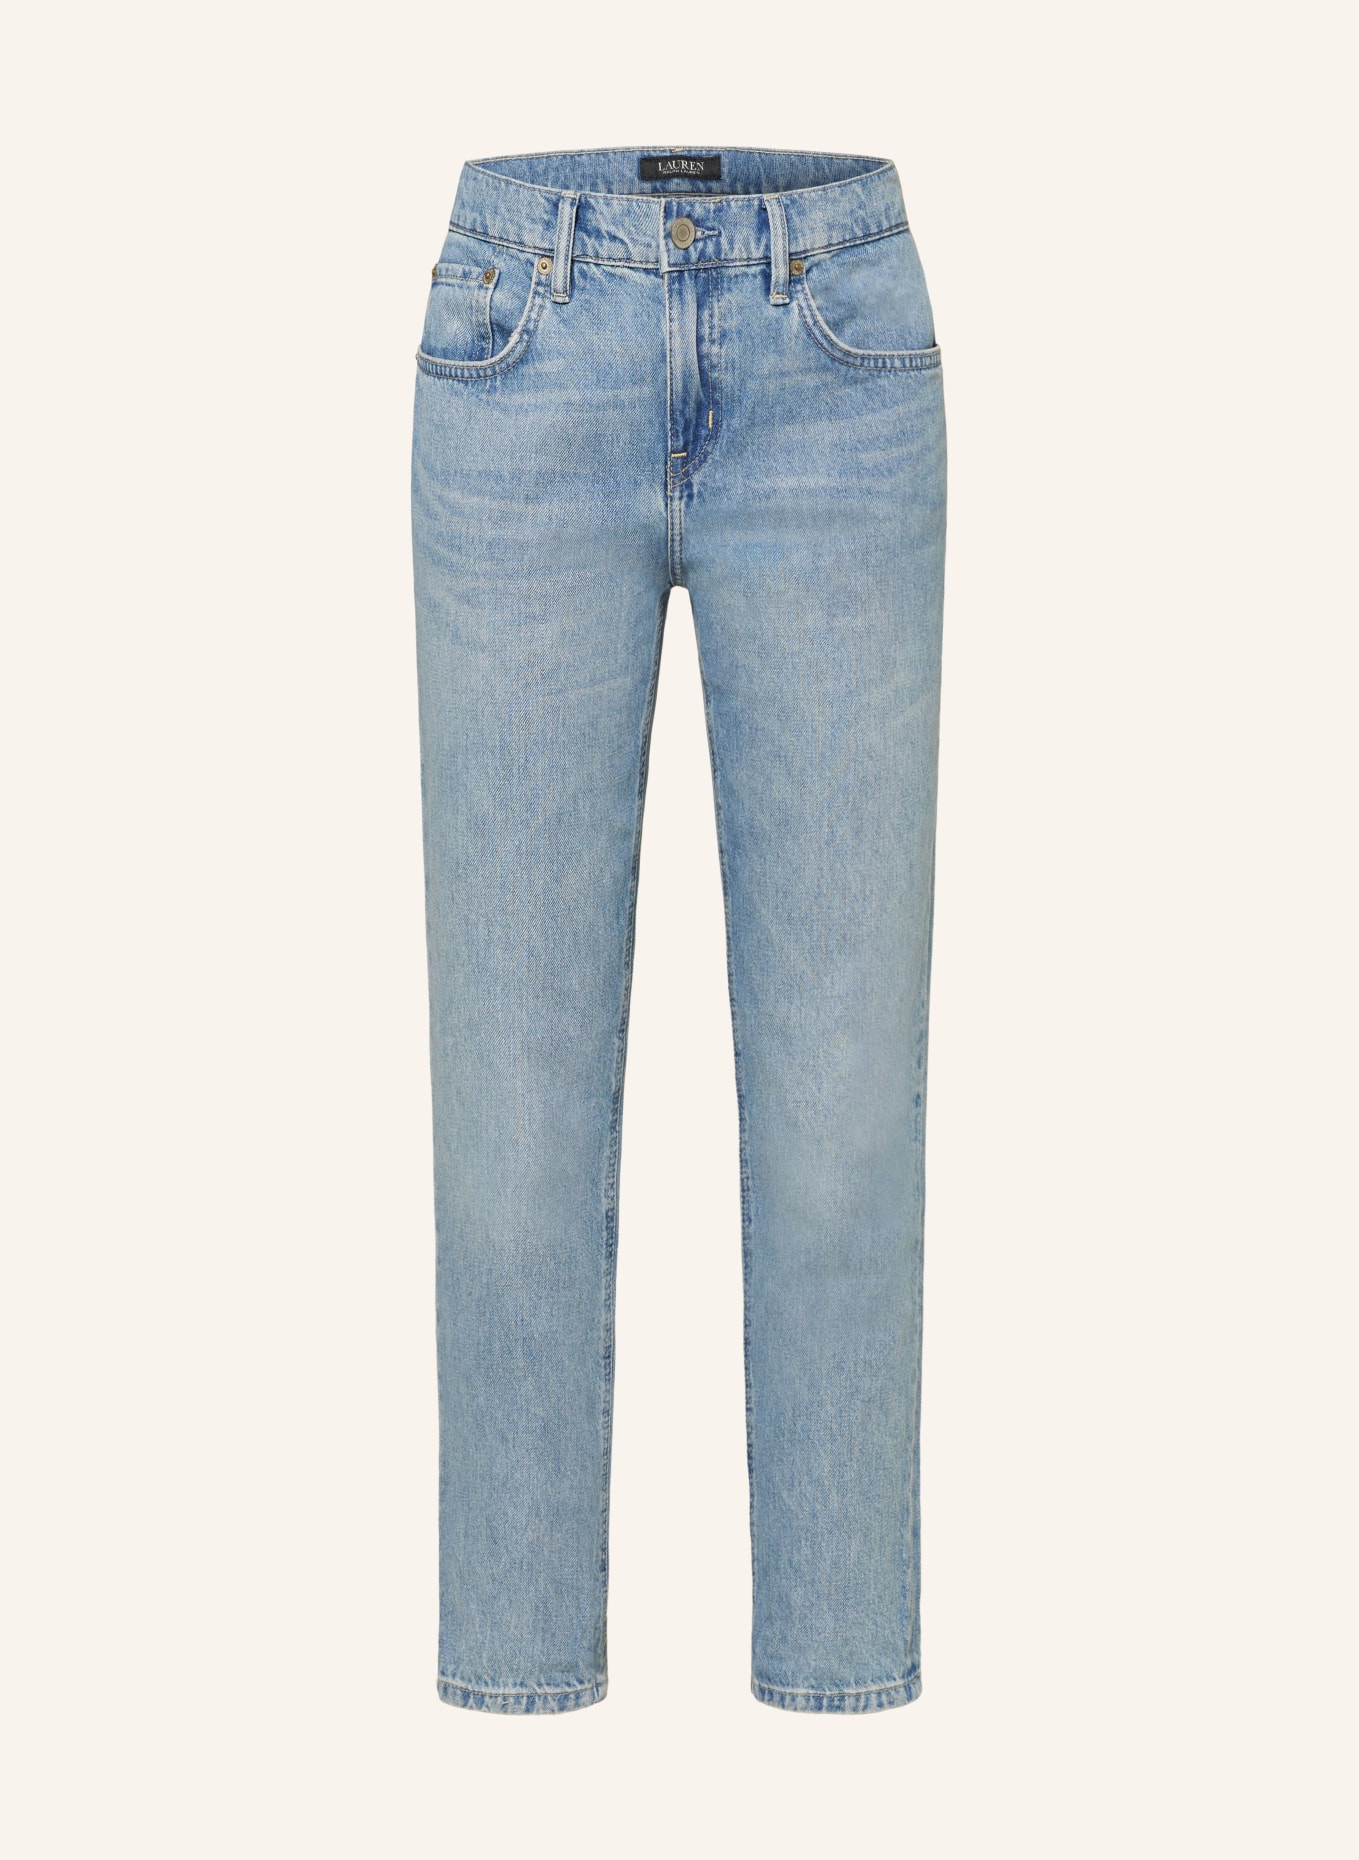 LAUREN RALPH LAUREN Straight Jeans, Farbe: 001 ISLA WASH (Bild 1)